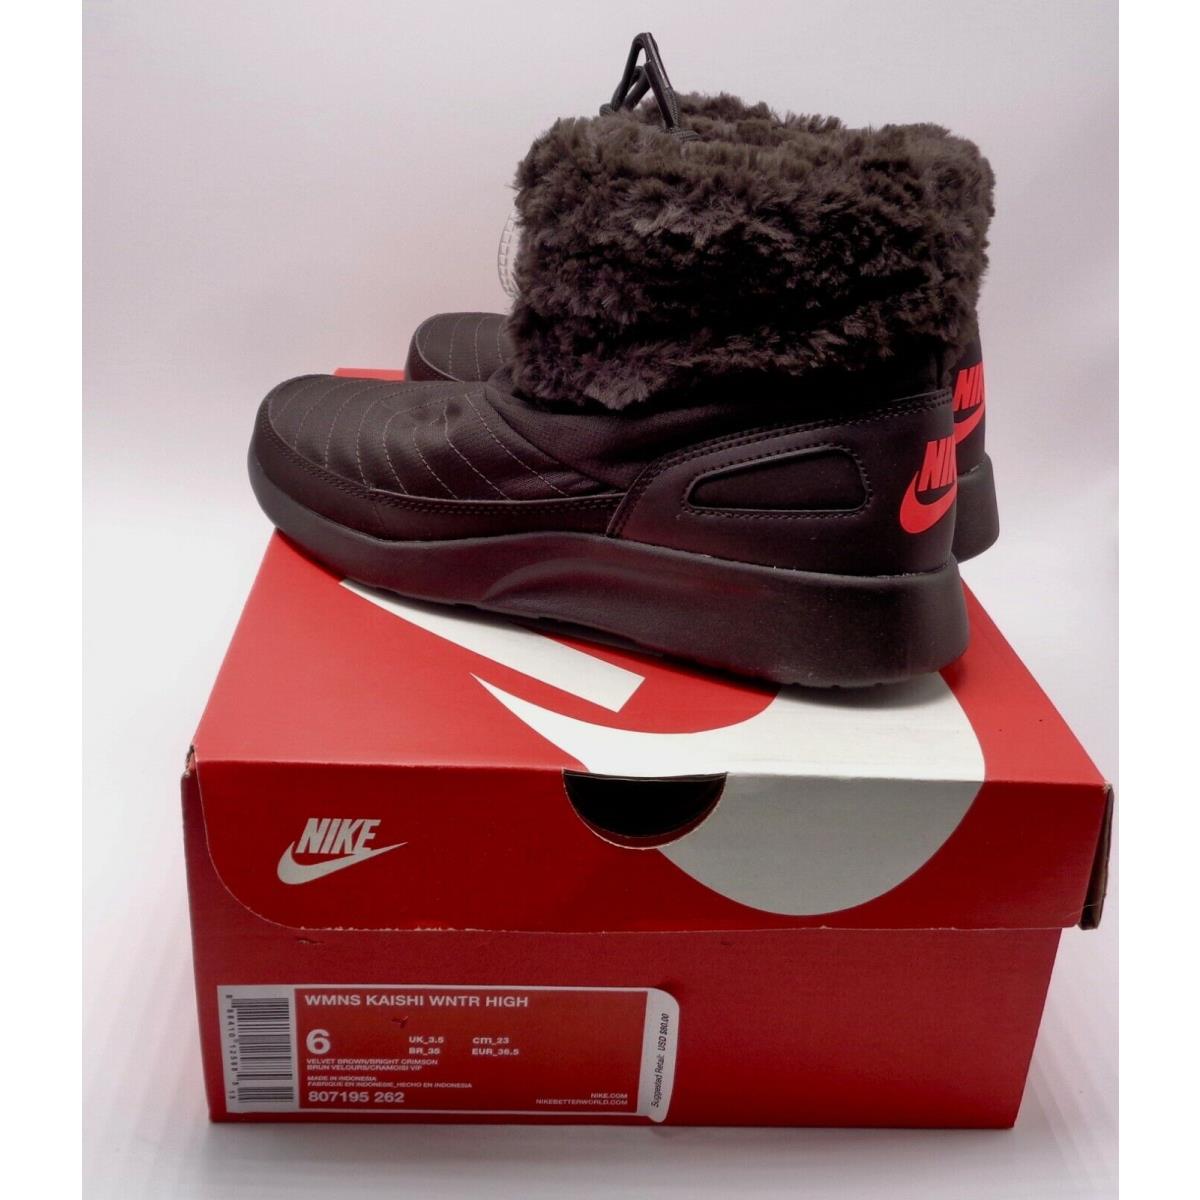 Nike Kaishi Winter High Shoes Boots Womens Size 6 Faux Fur Velvet Brown/crimson